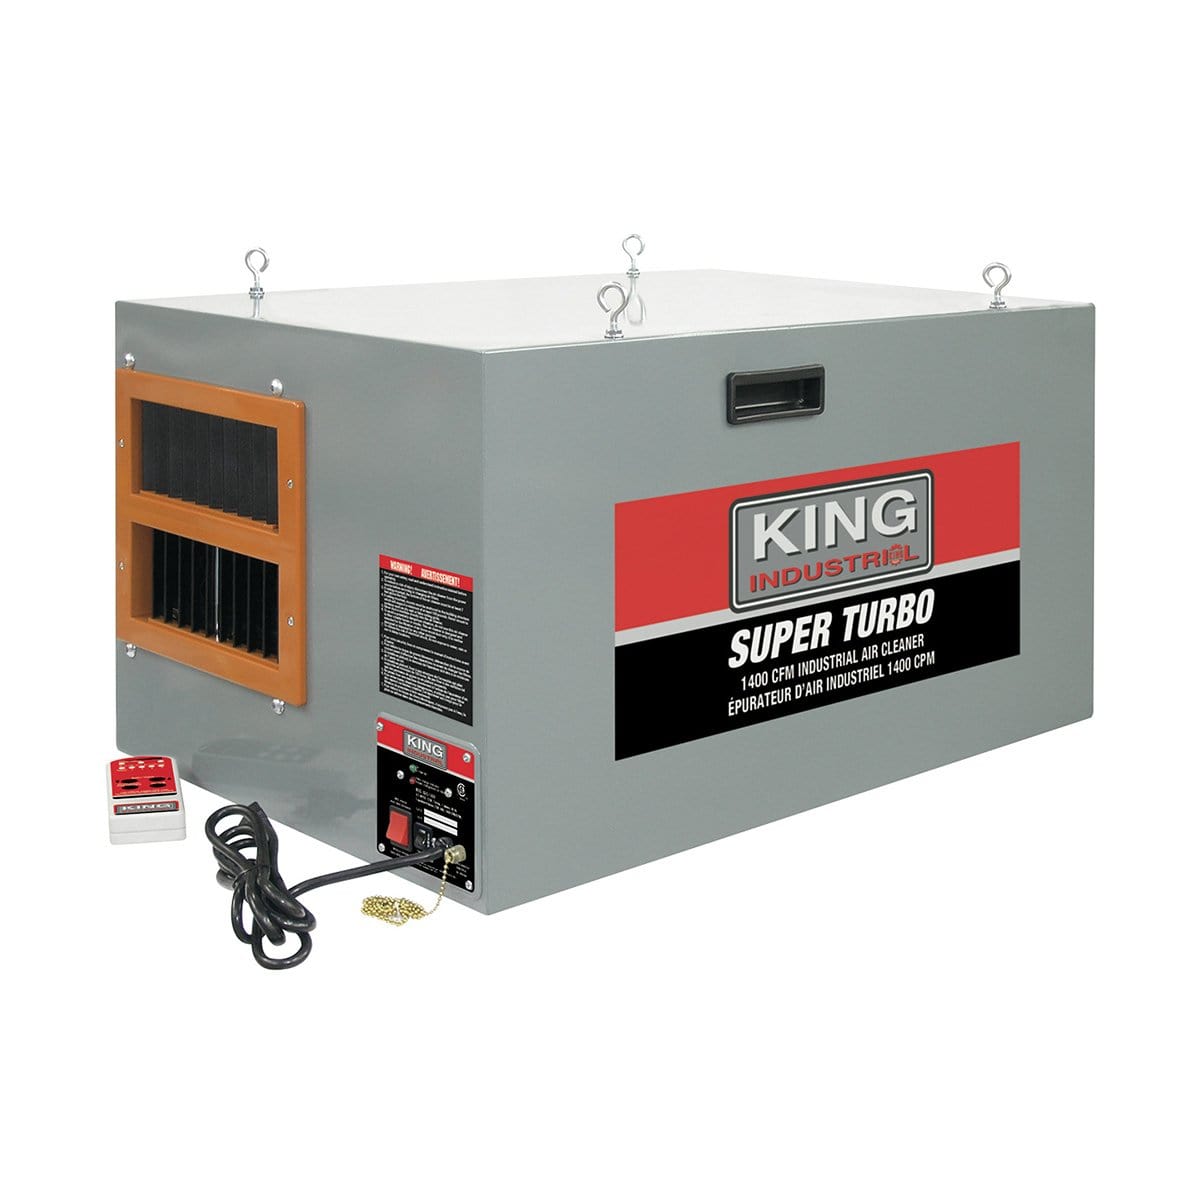 King Industrial KAC-1400 Air Filtration 1400CFM Industrial Air Cleaner